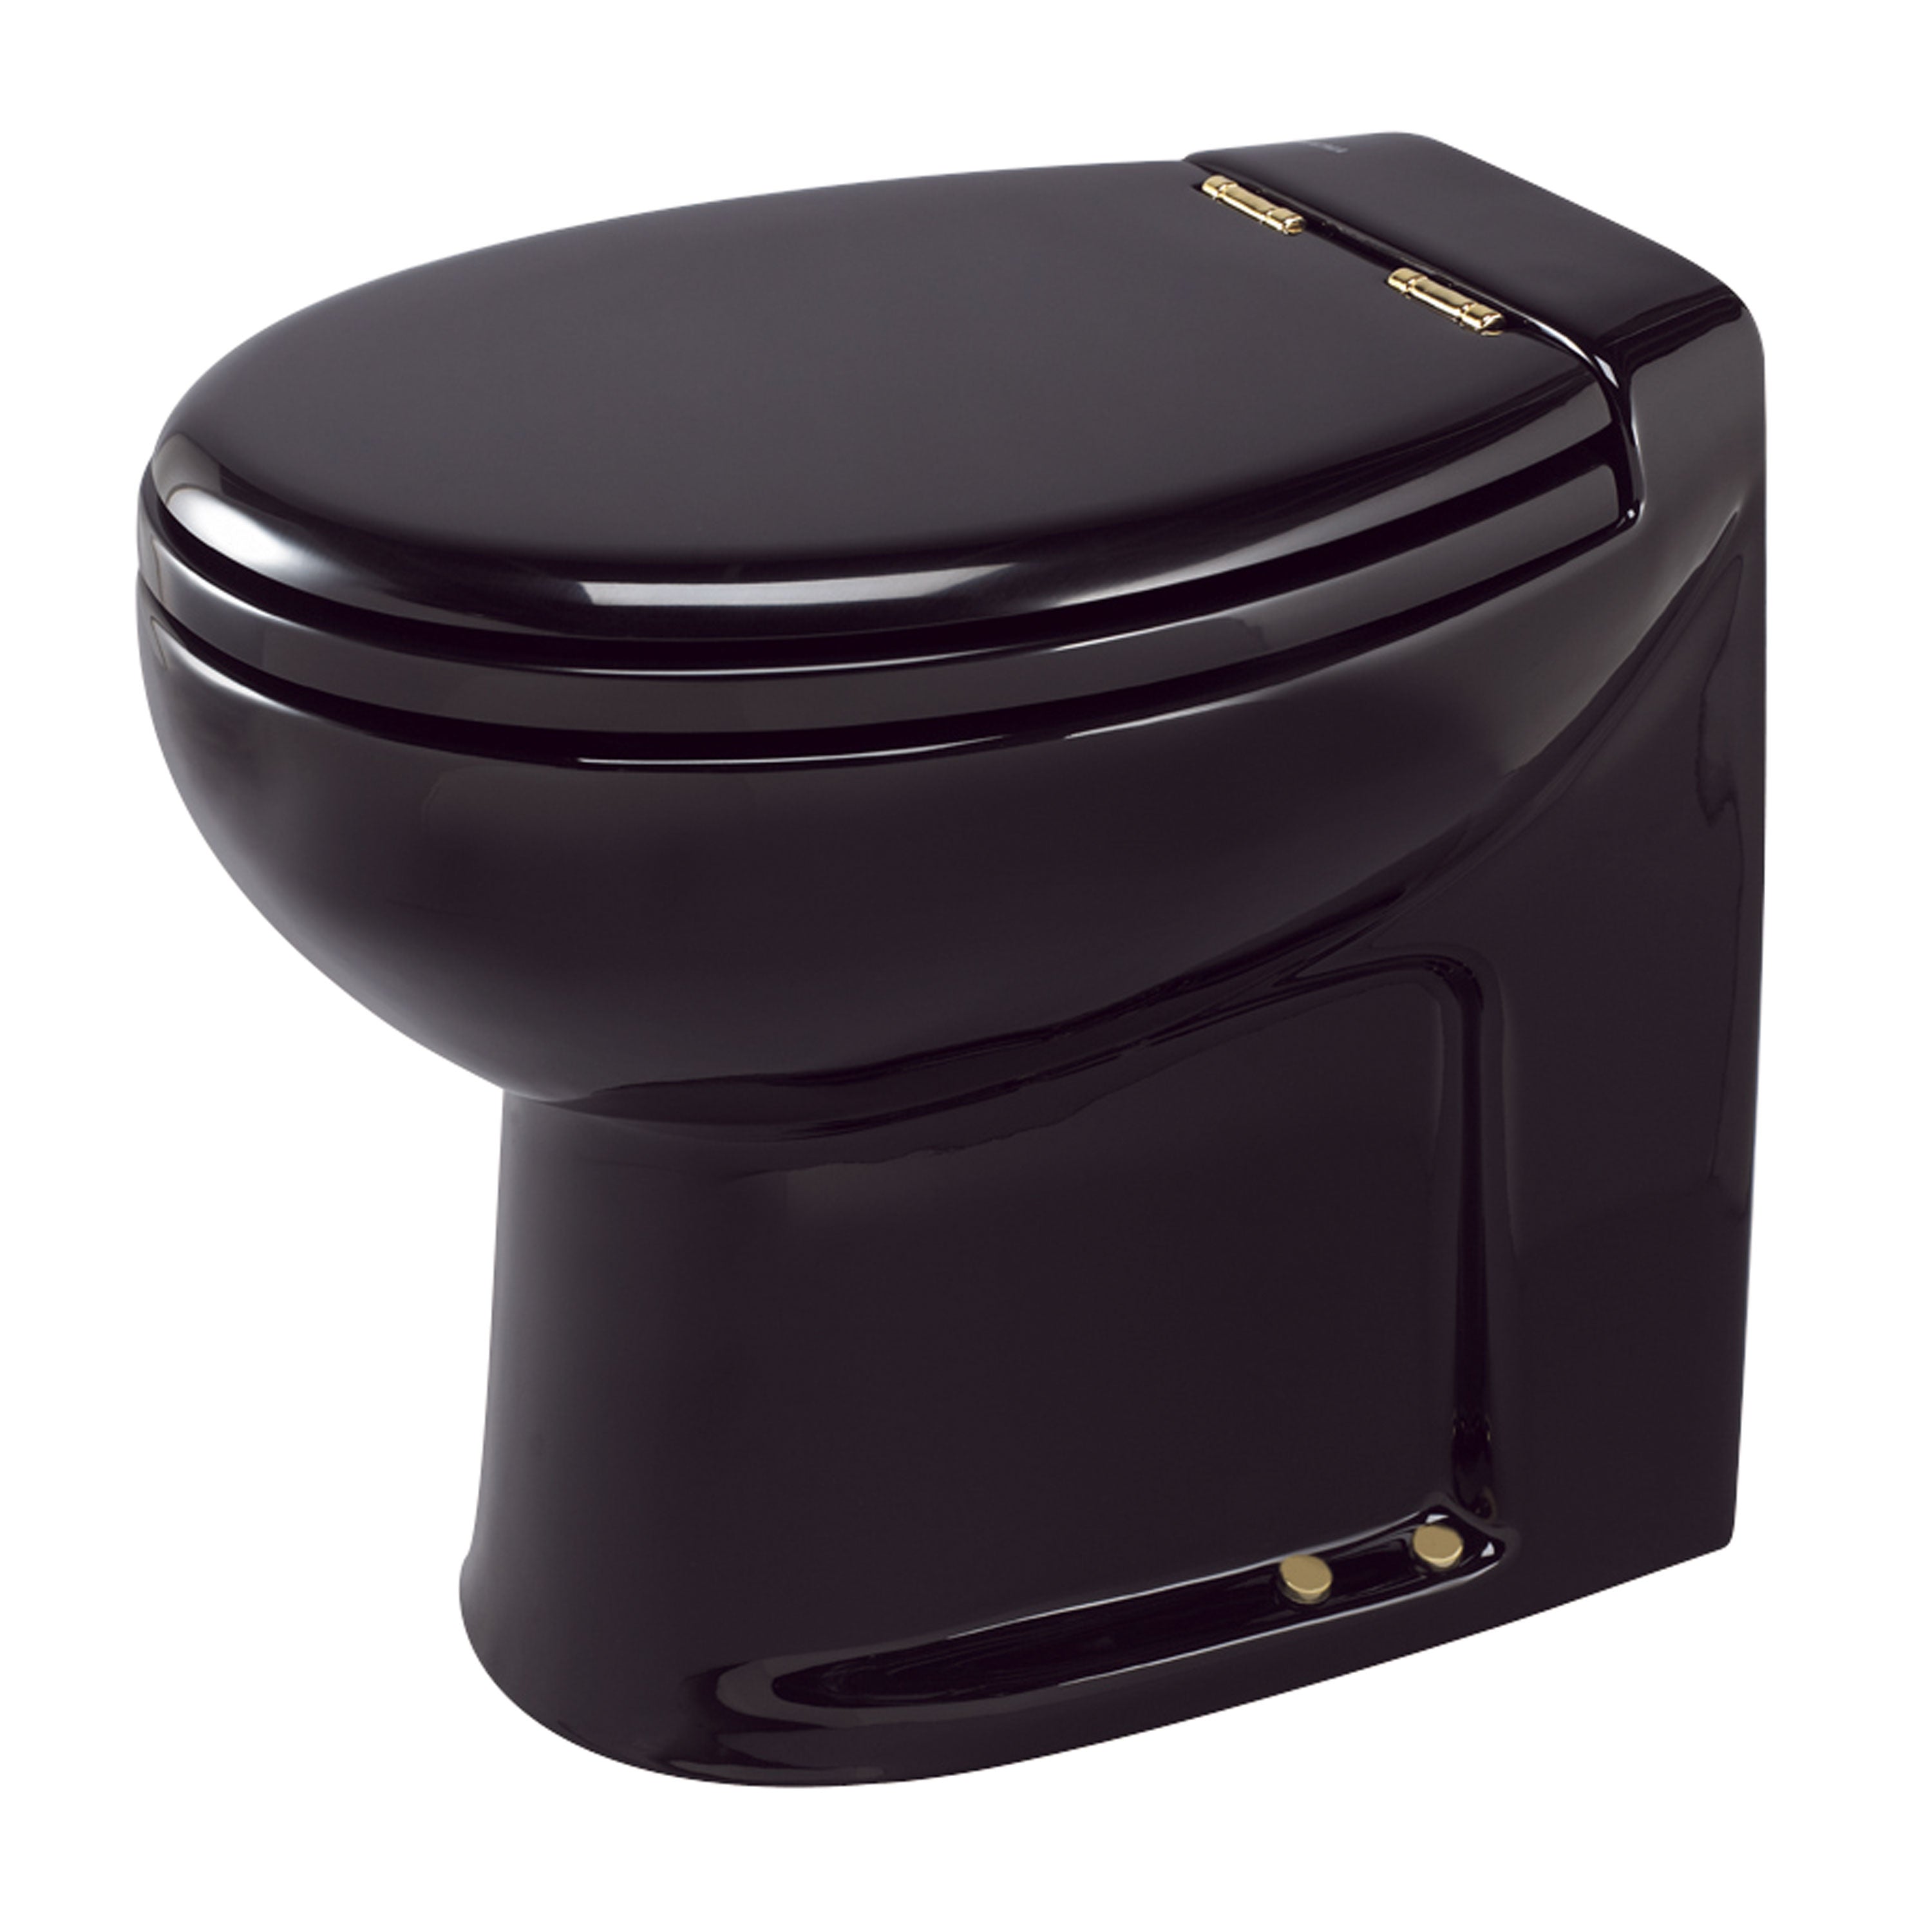 Thetford 38007 Tecma Silence Plus 1 Mode 12V RV Toilet with Wall Switch - High, Black/Gold